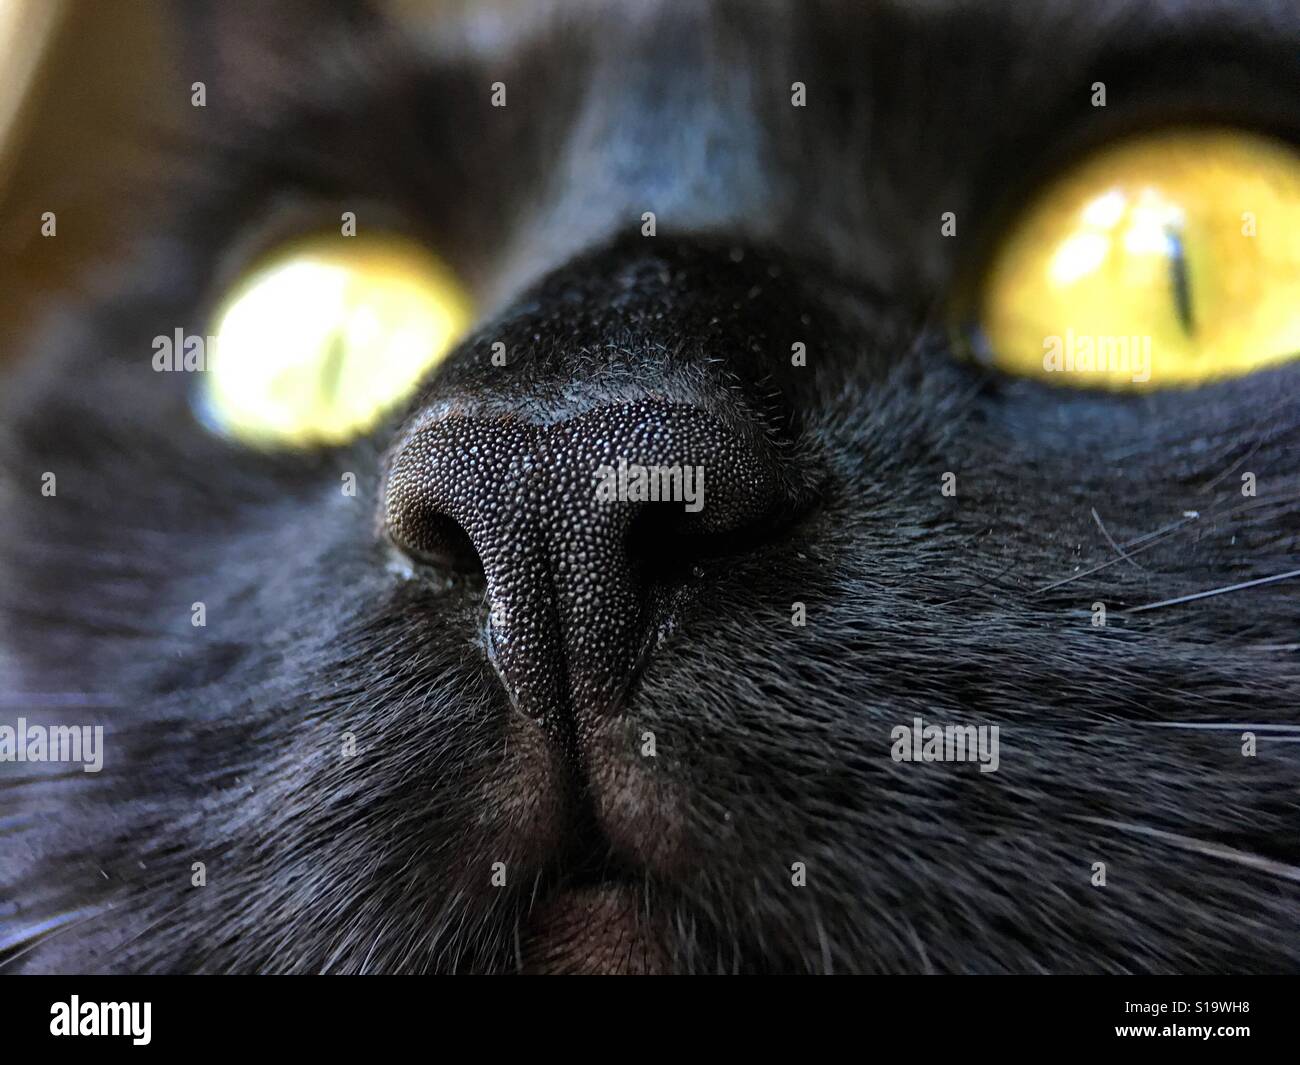 Black cat nose close up Stock Photo